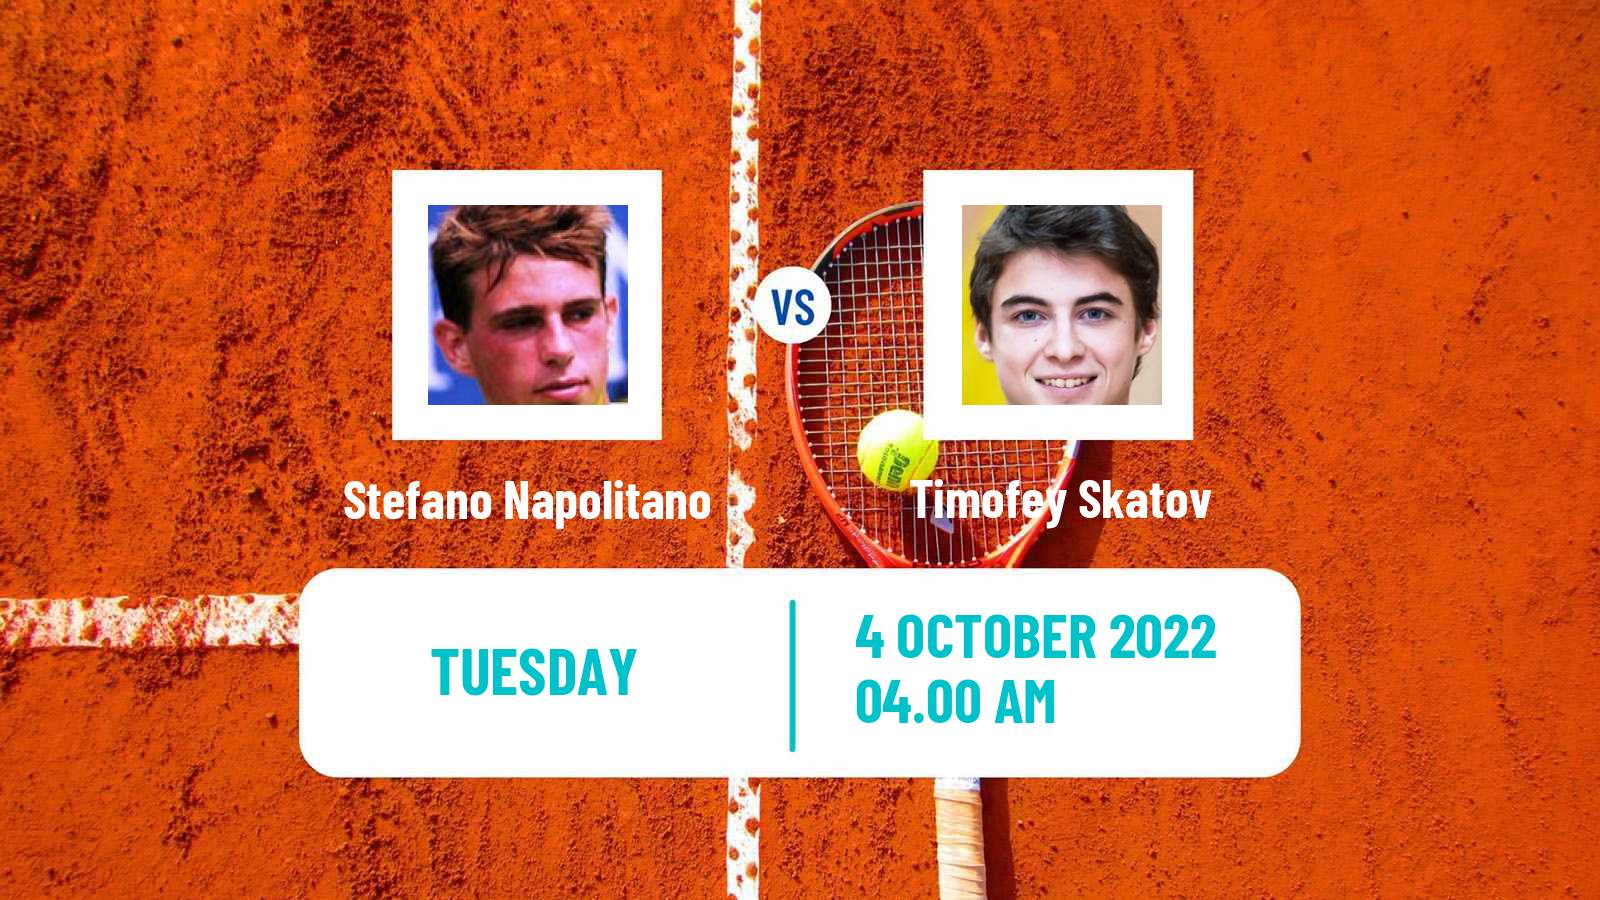 Tennis ATP Challenger Stefano Napolitano - Timofey Skatov